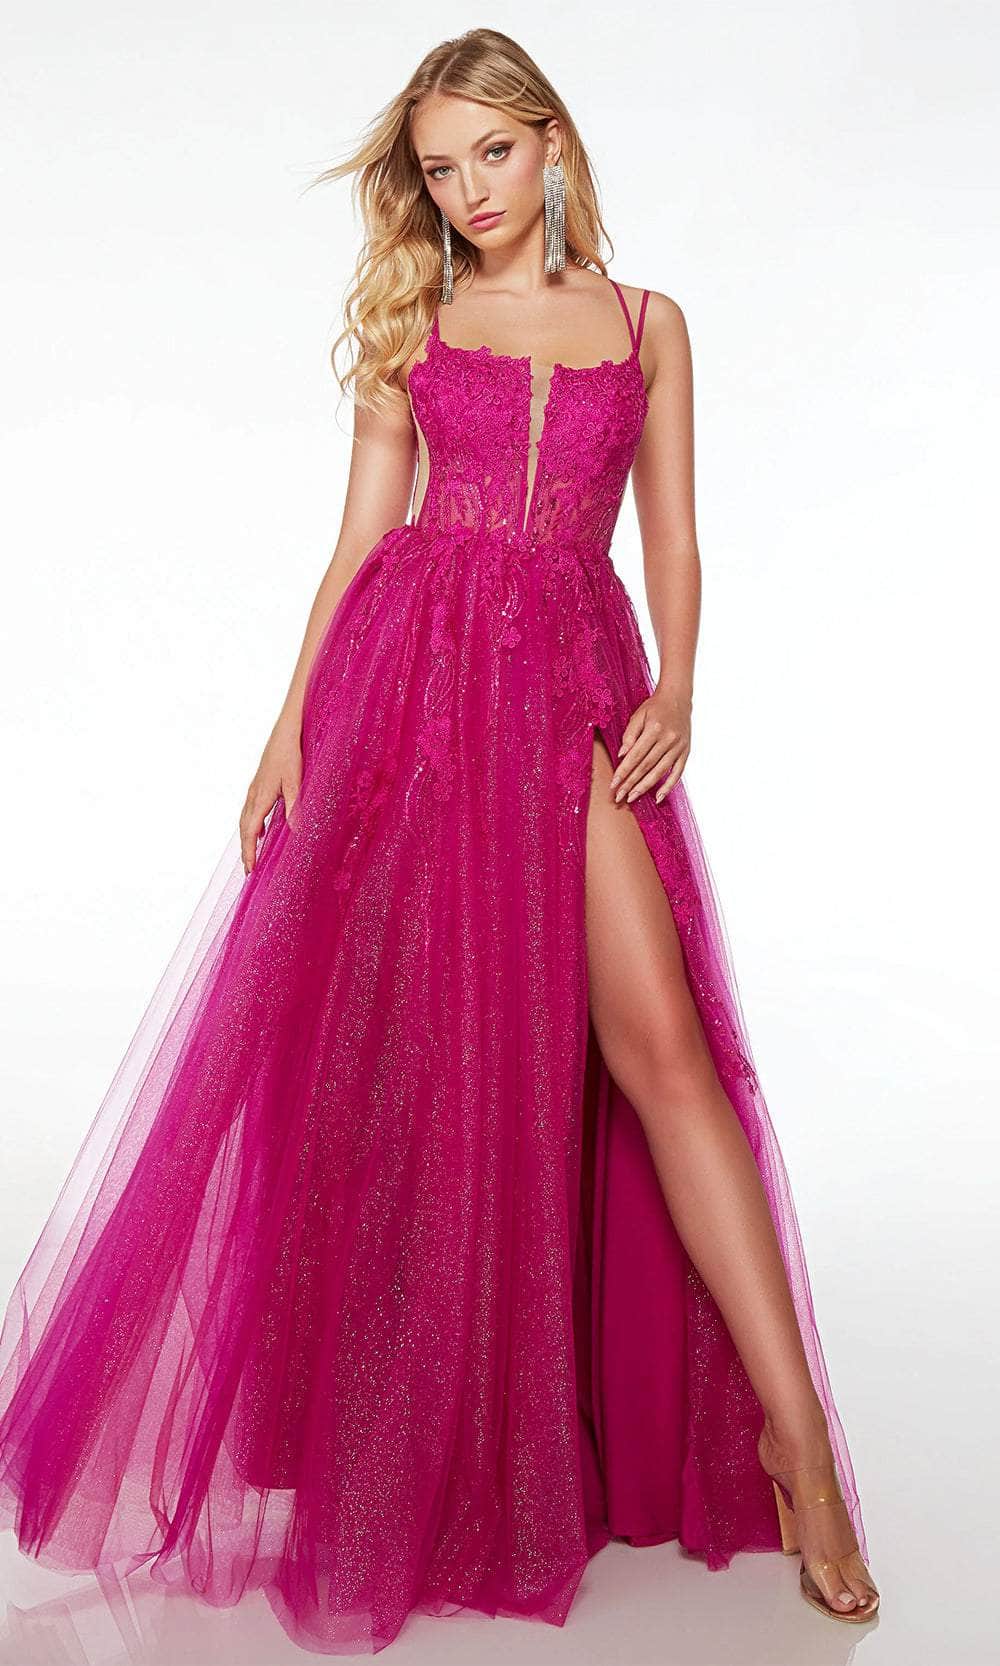 Image of Alyce Paris 61498 - Lace Sleeveless Corset Prom Dress